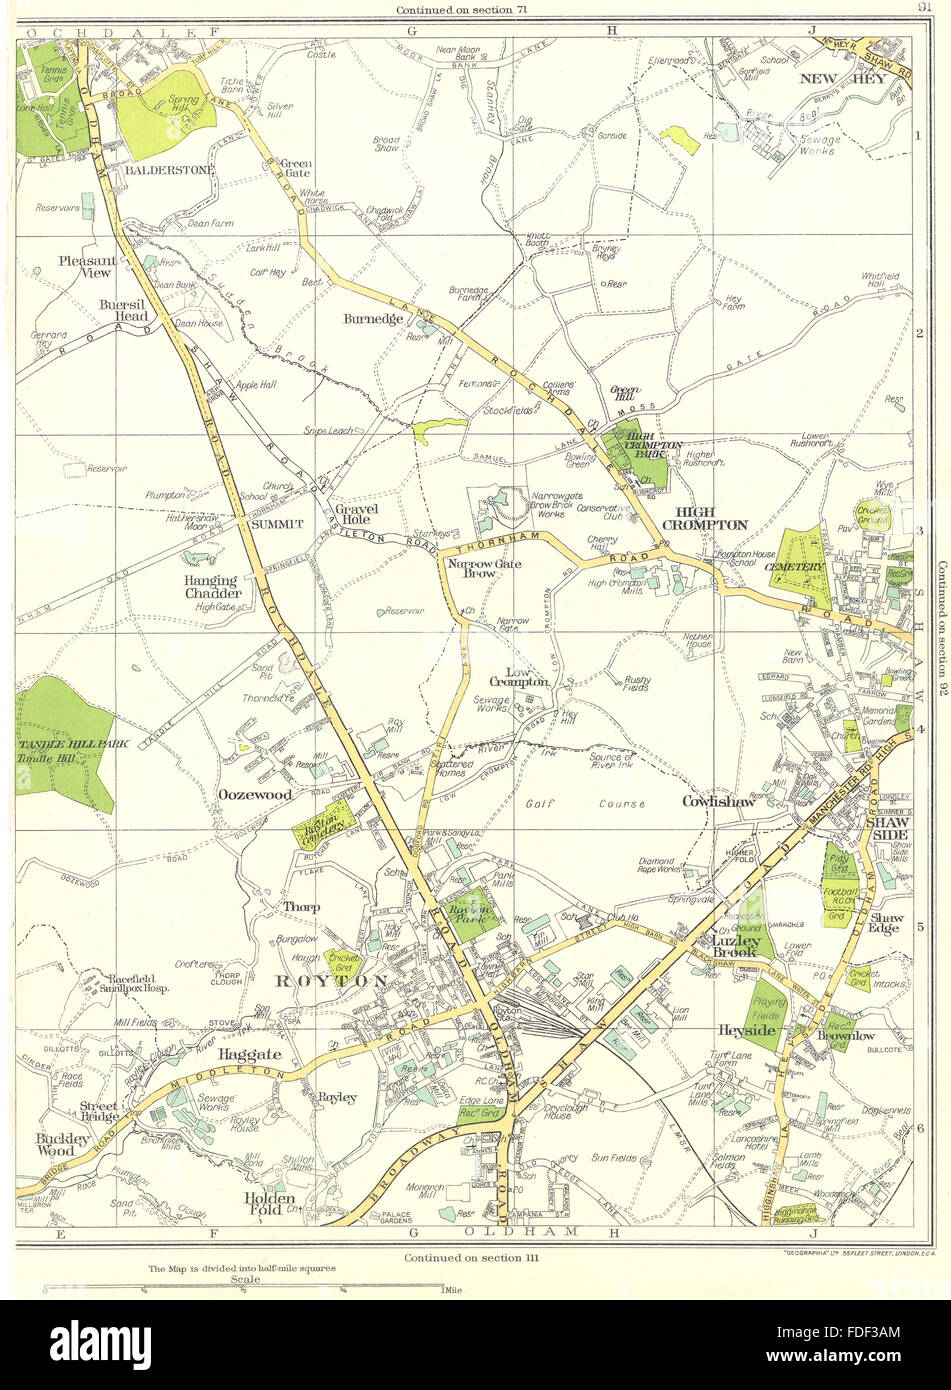 LANCS Rochdale Shaw Royton Holdenfold Heyside High Crompton Shawside 1935 map Stock Photo